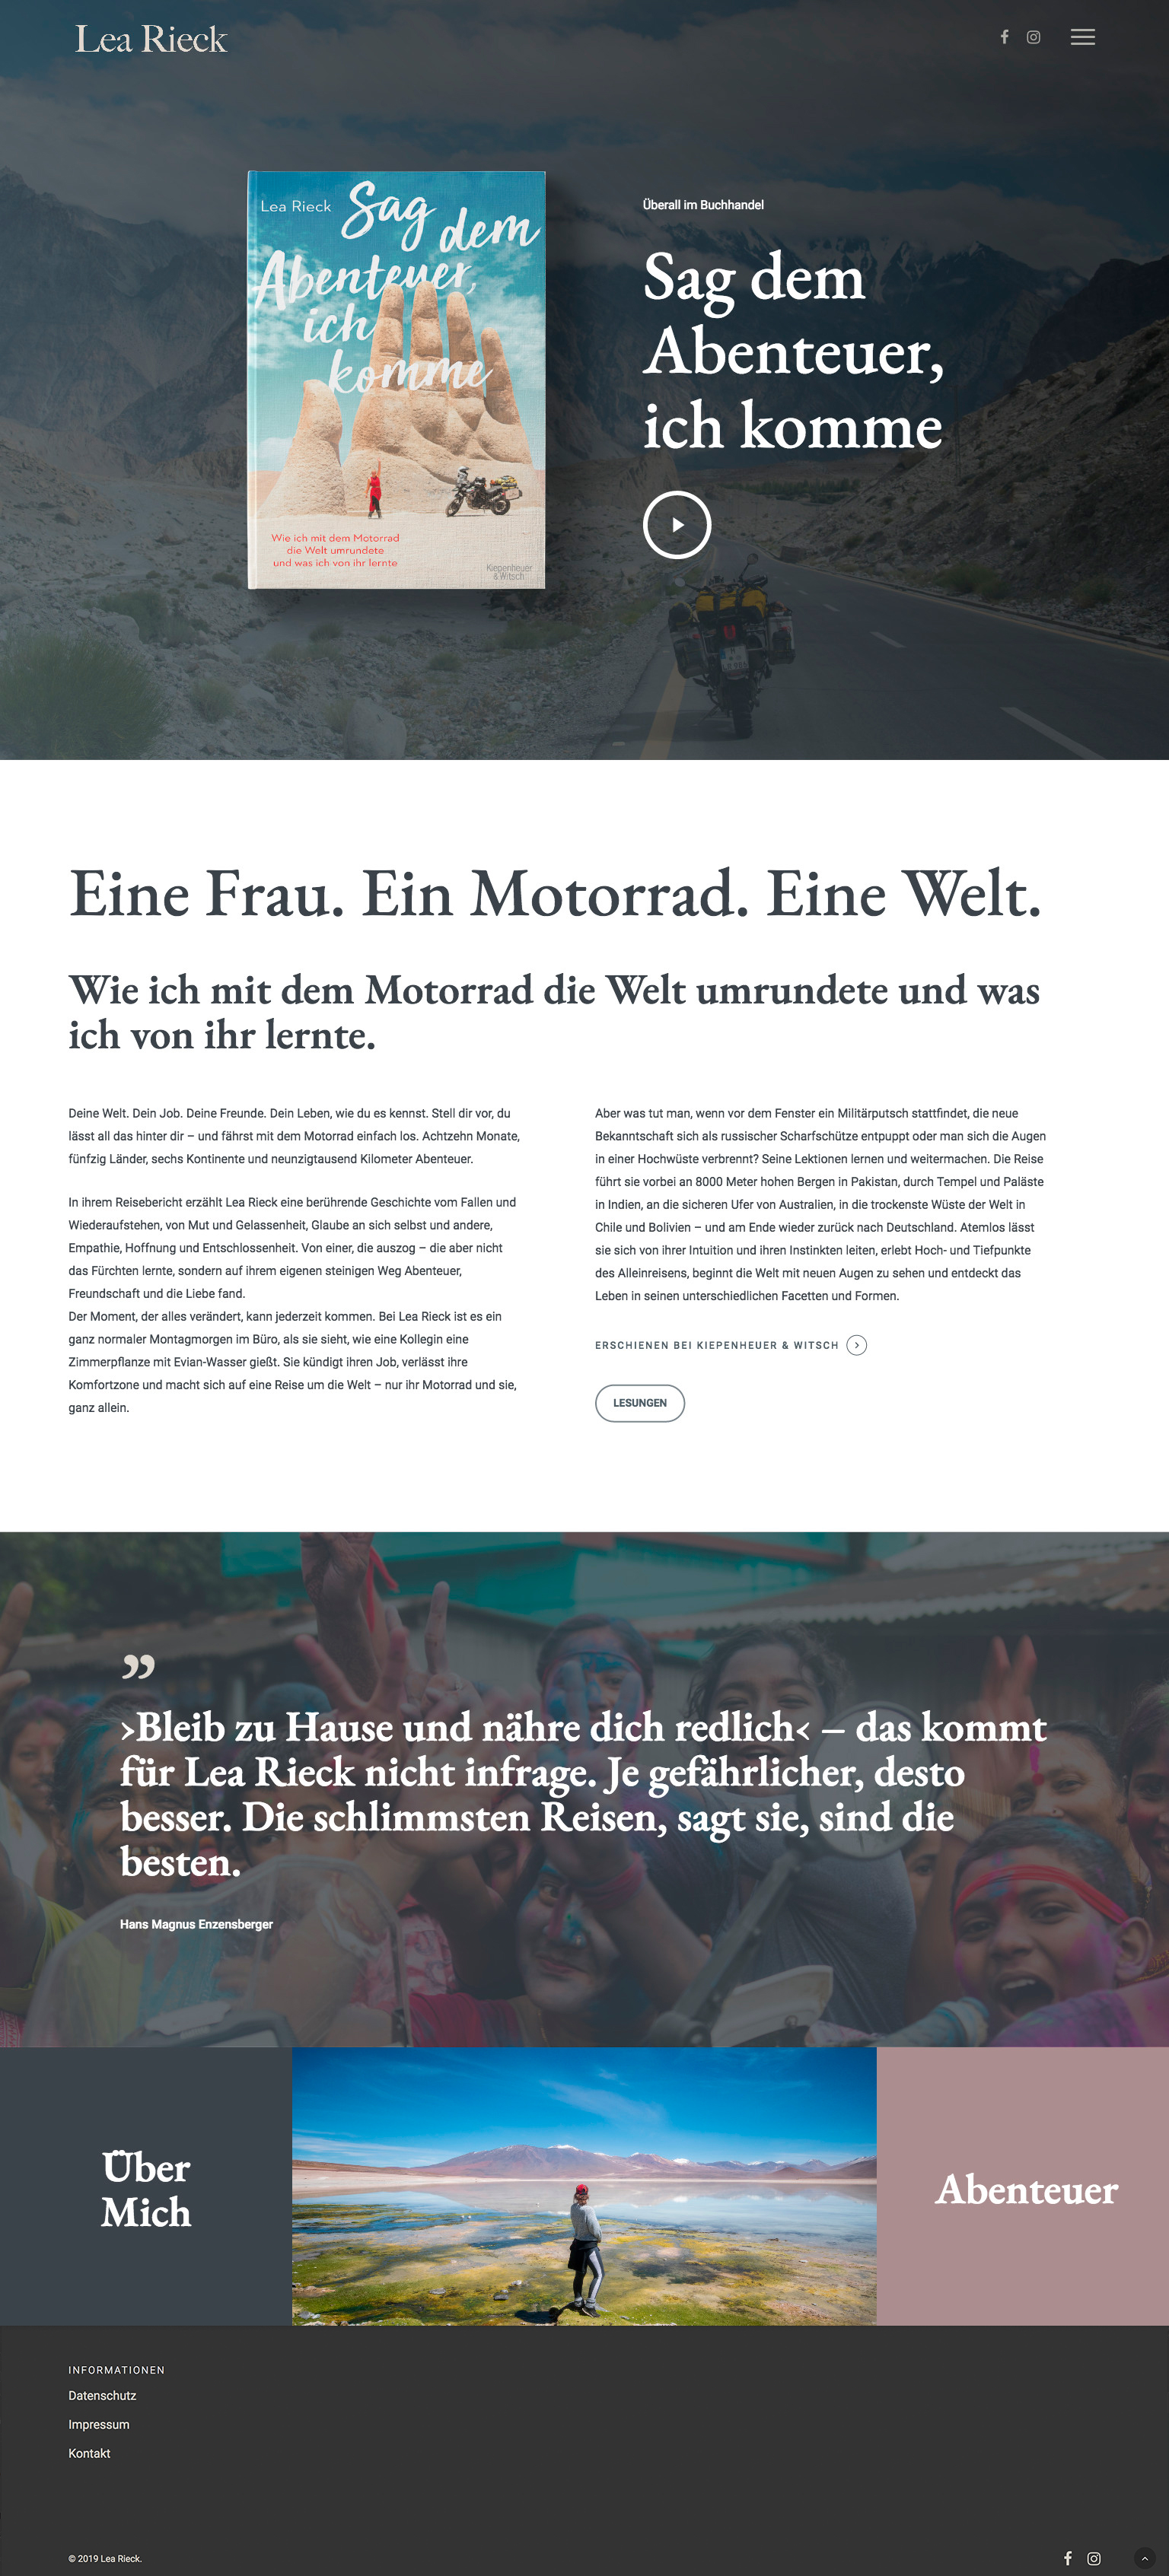 Lea Rieck Website designed by Tobias Heumann